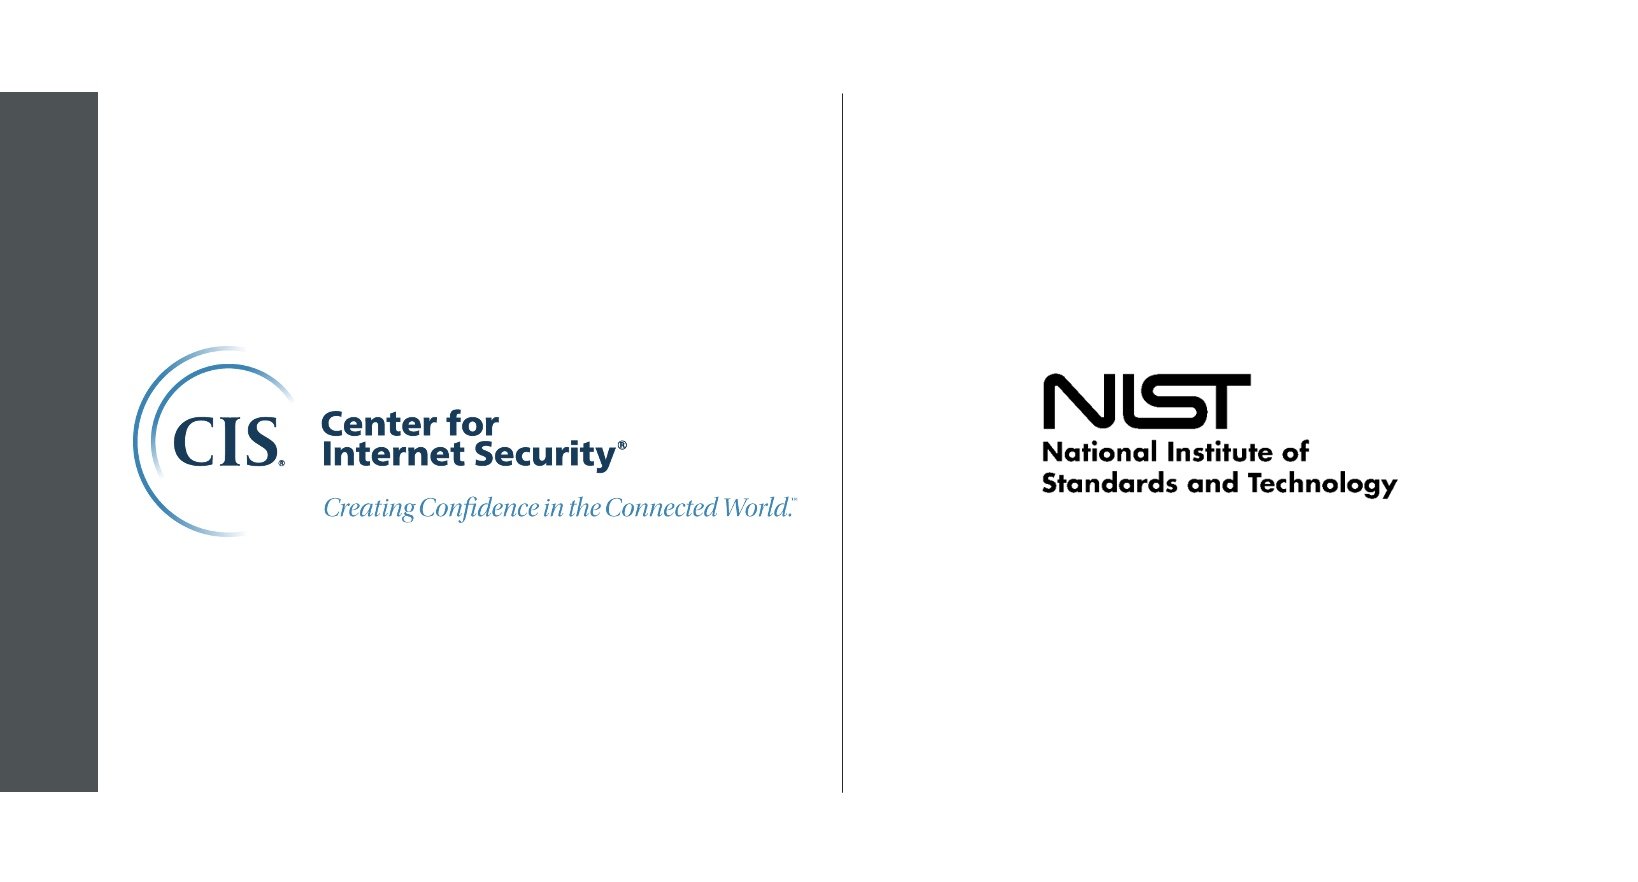 CIS vs. NIST